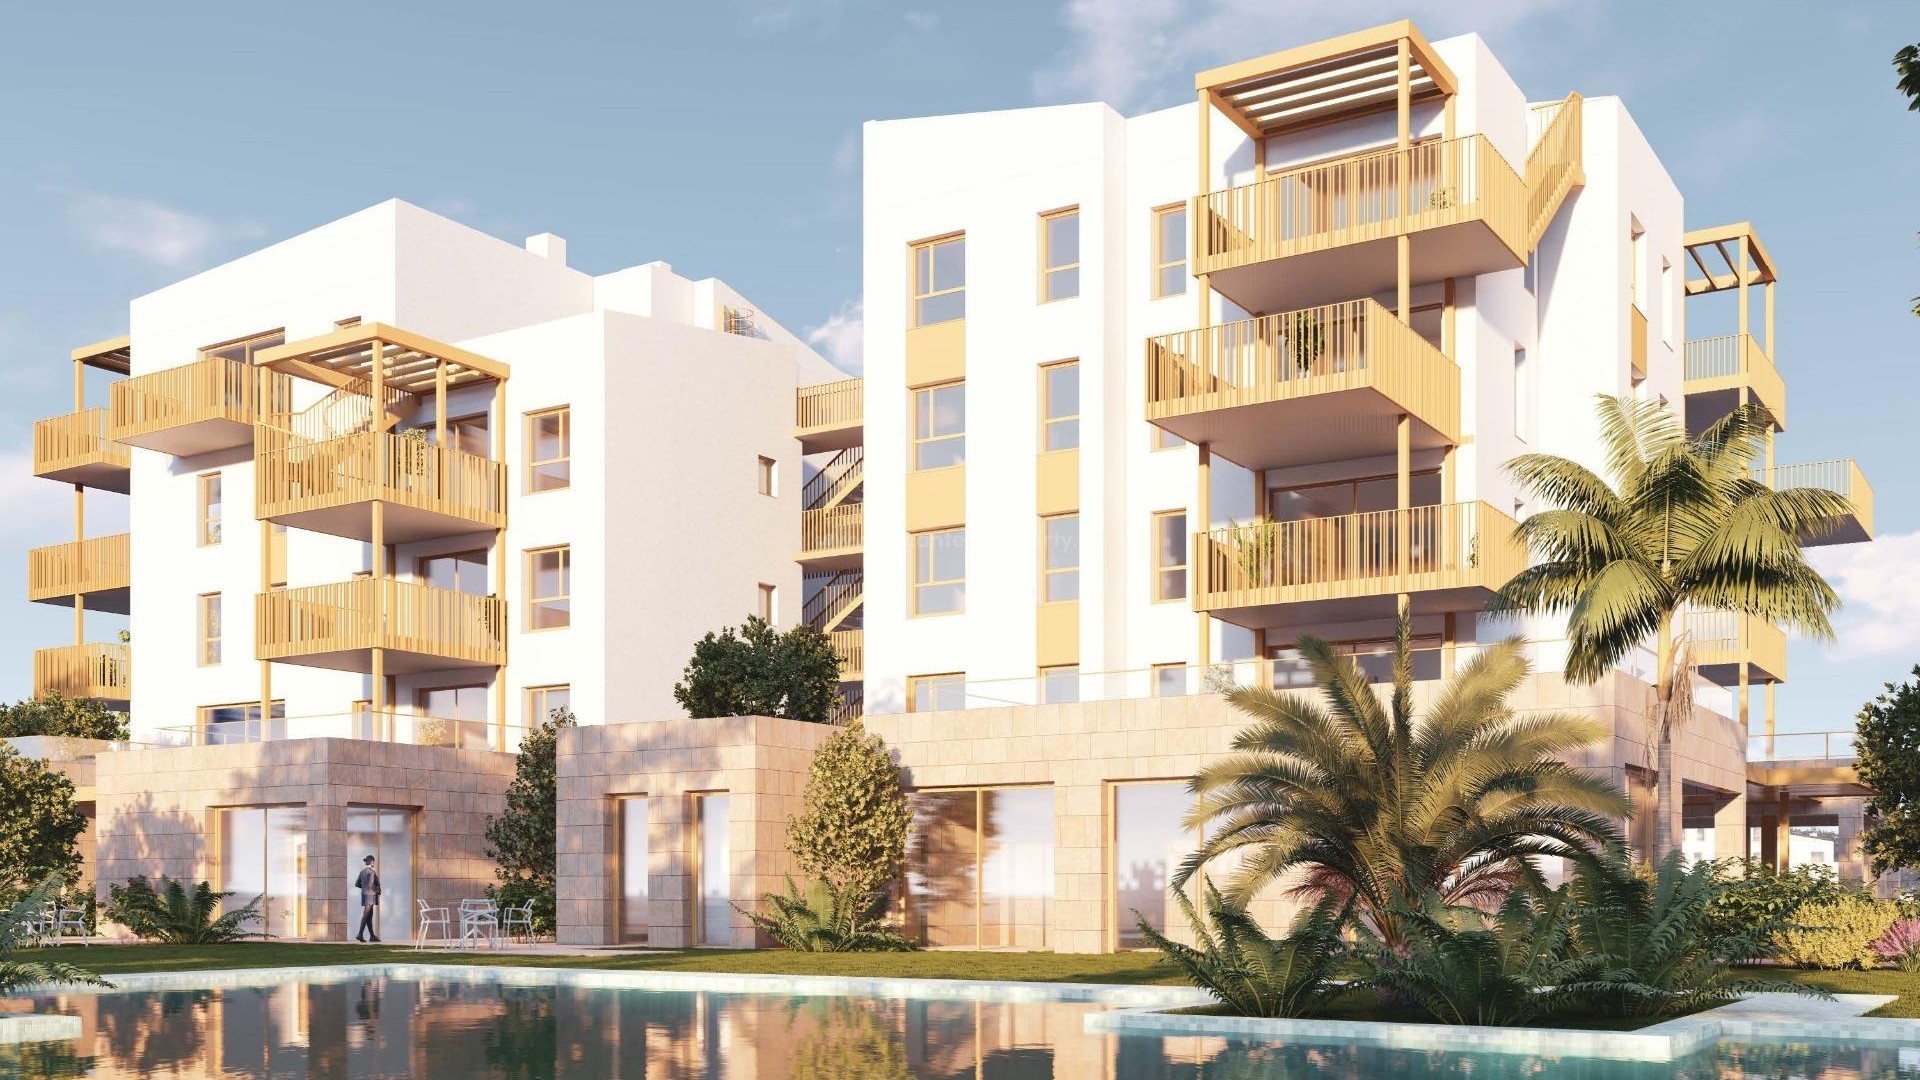 65 modern apartments and townhouses in El Vergel near Denia, 2/3 bedrooms, pool, gym, close to La Almadraba beach in Denia.